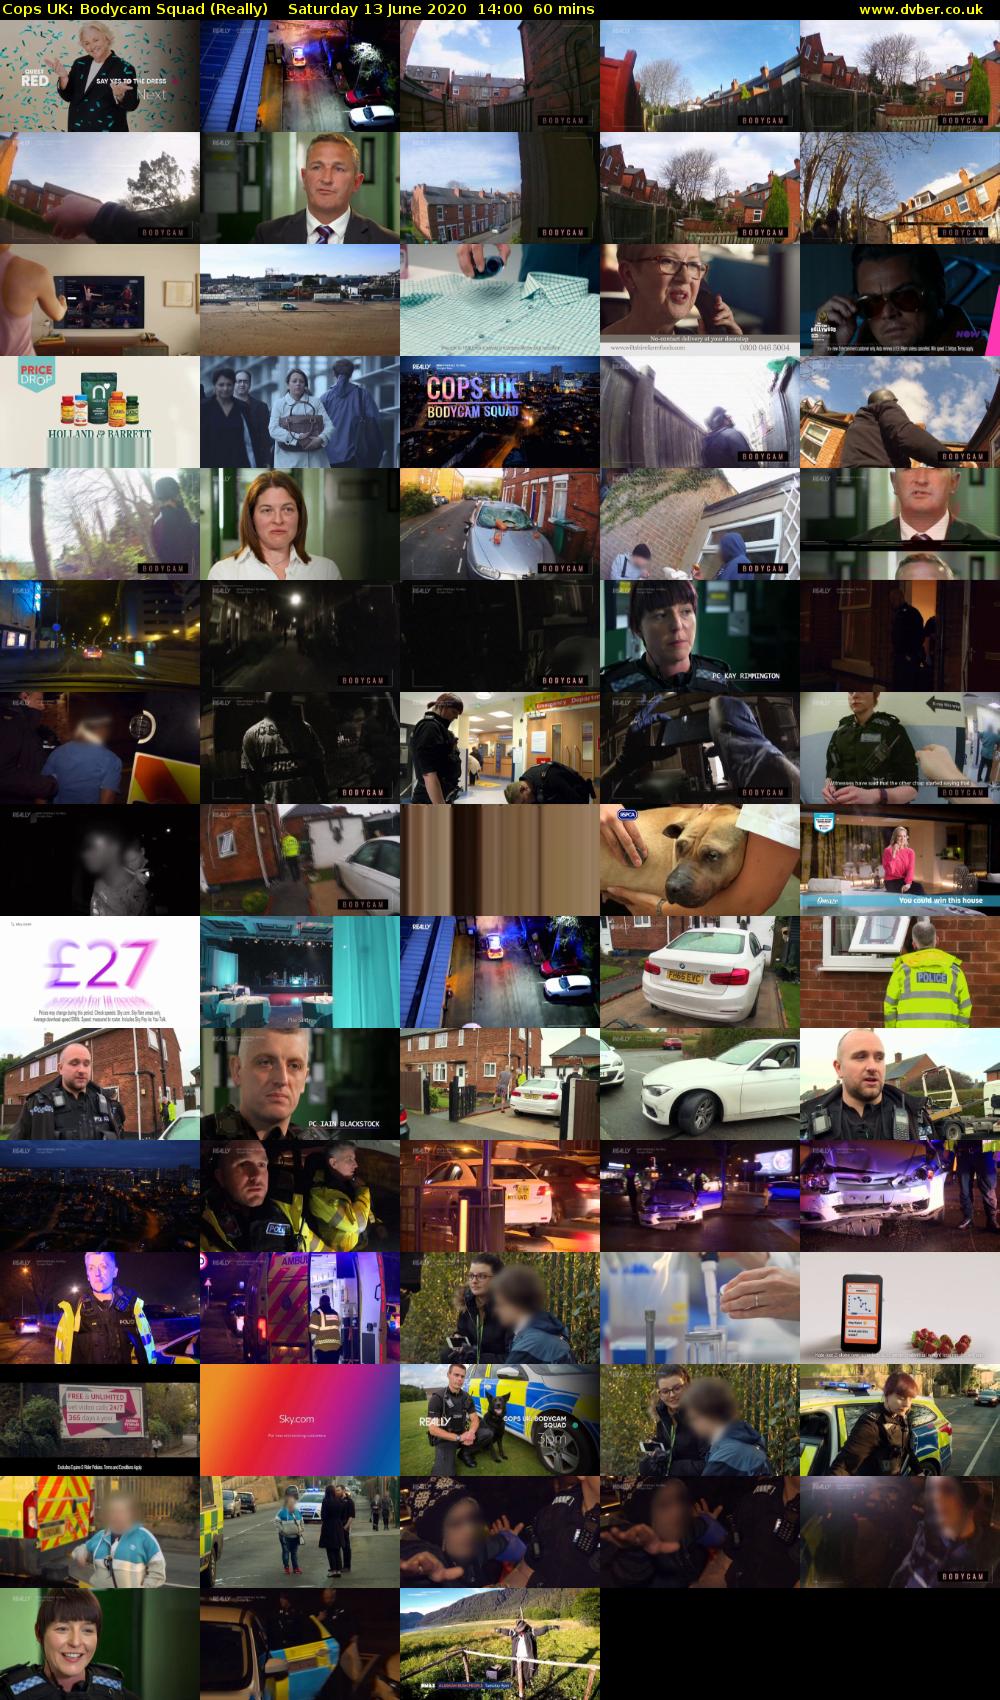 Cops UK: Bodycam Squad (Really) Saturday 13 June 2020 14:00 - 15:00